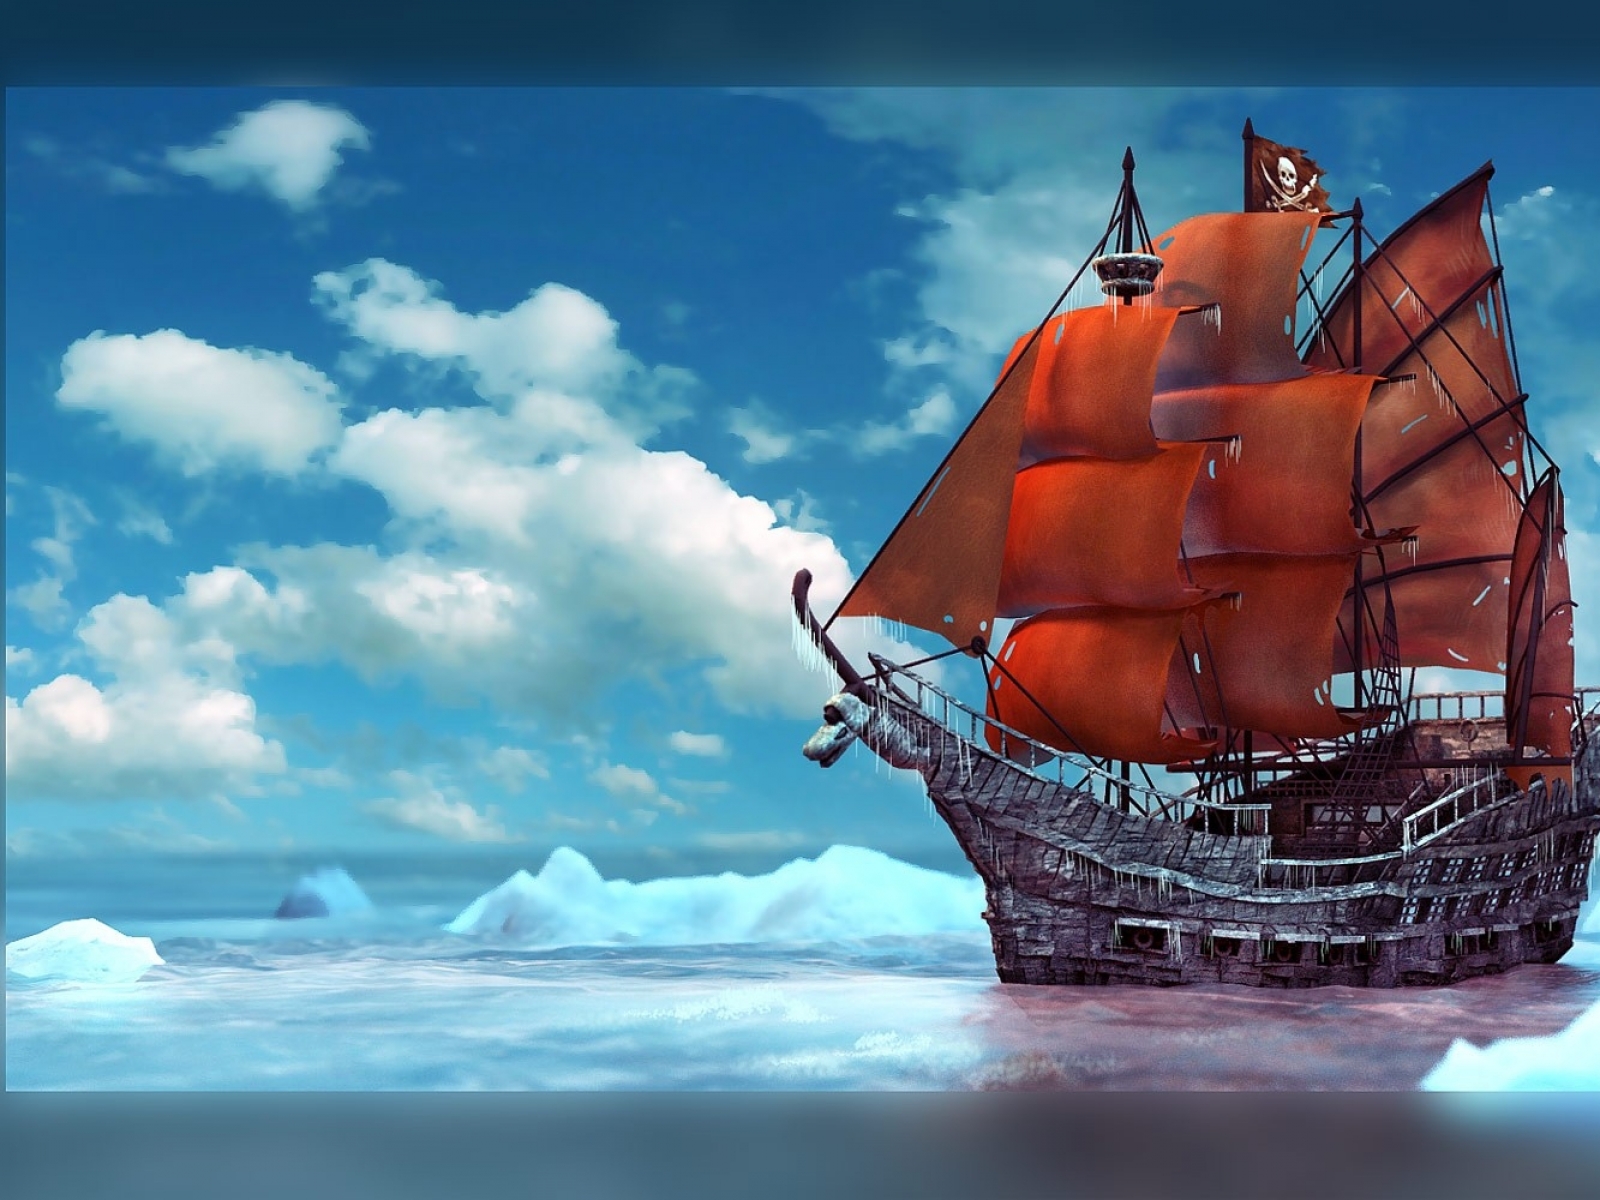 Pirate ship wallpaper   ForWallpapercom